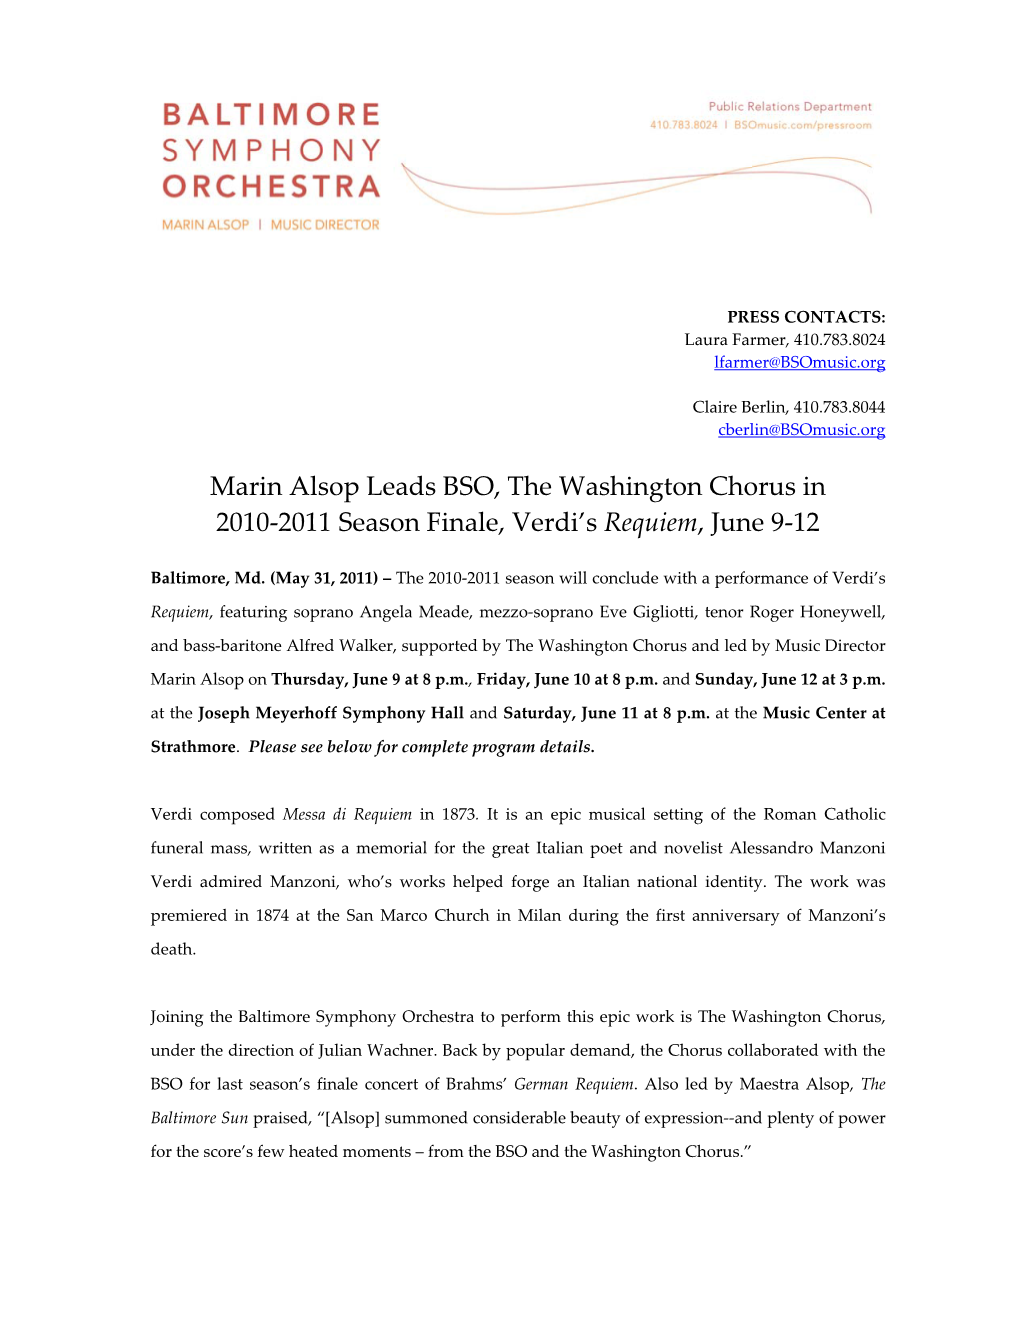 Marin Alsop Leads BSO, the Washington Chorus in 2010-2011